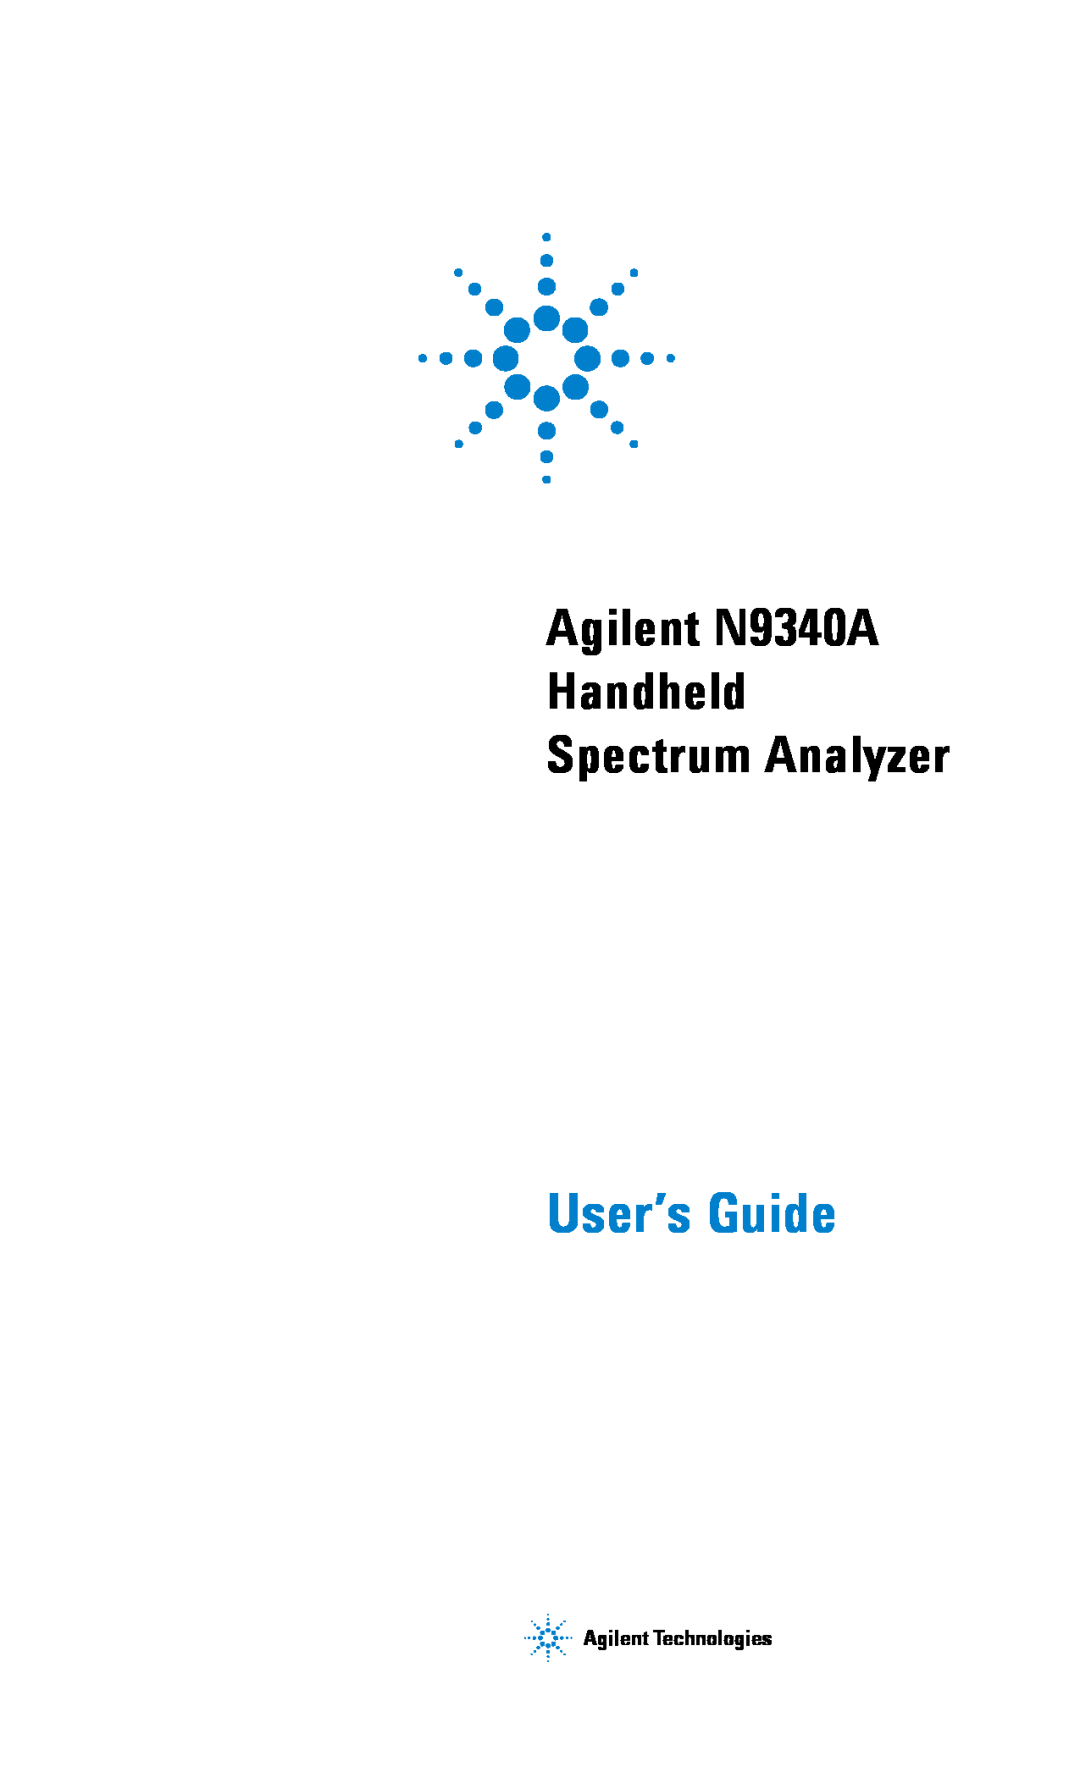 Agilent Technologies manual User’s Guide, Agilent N9340A Handheld Spectrum Analyzer 